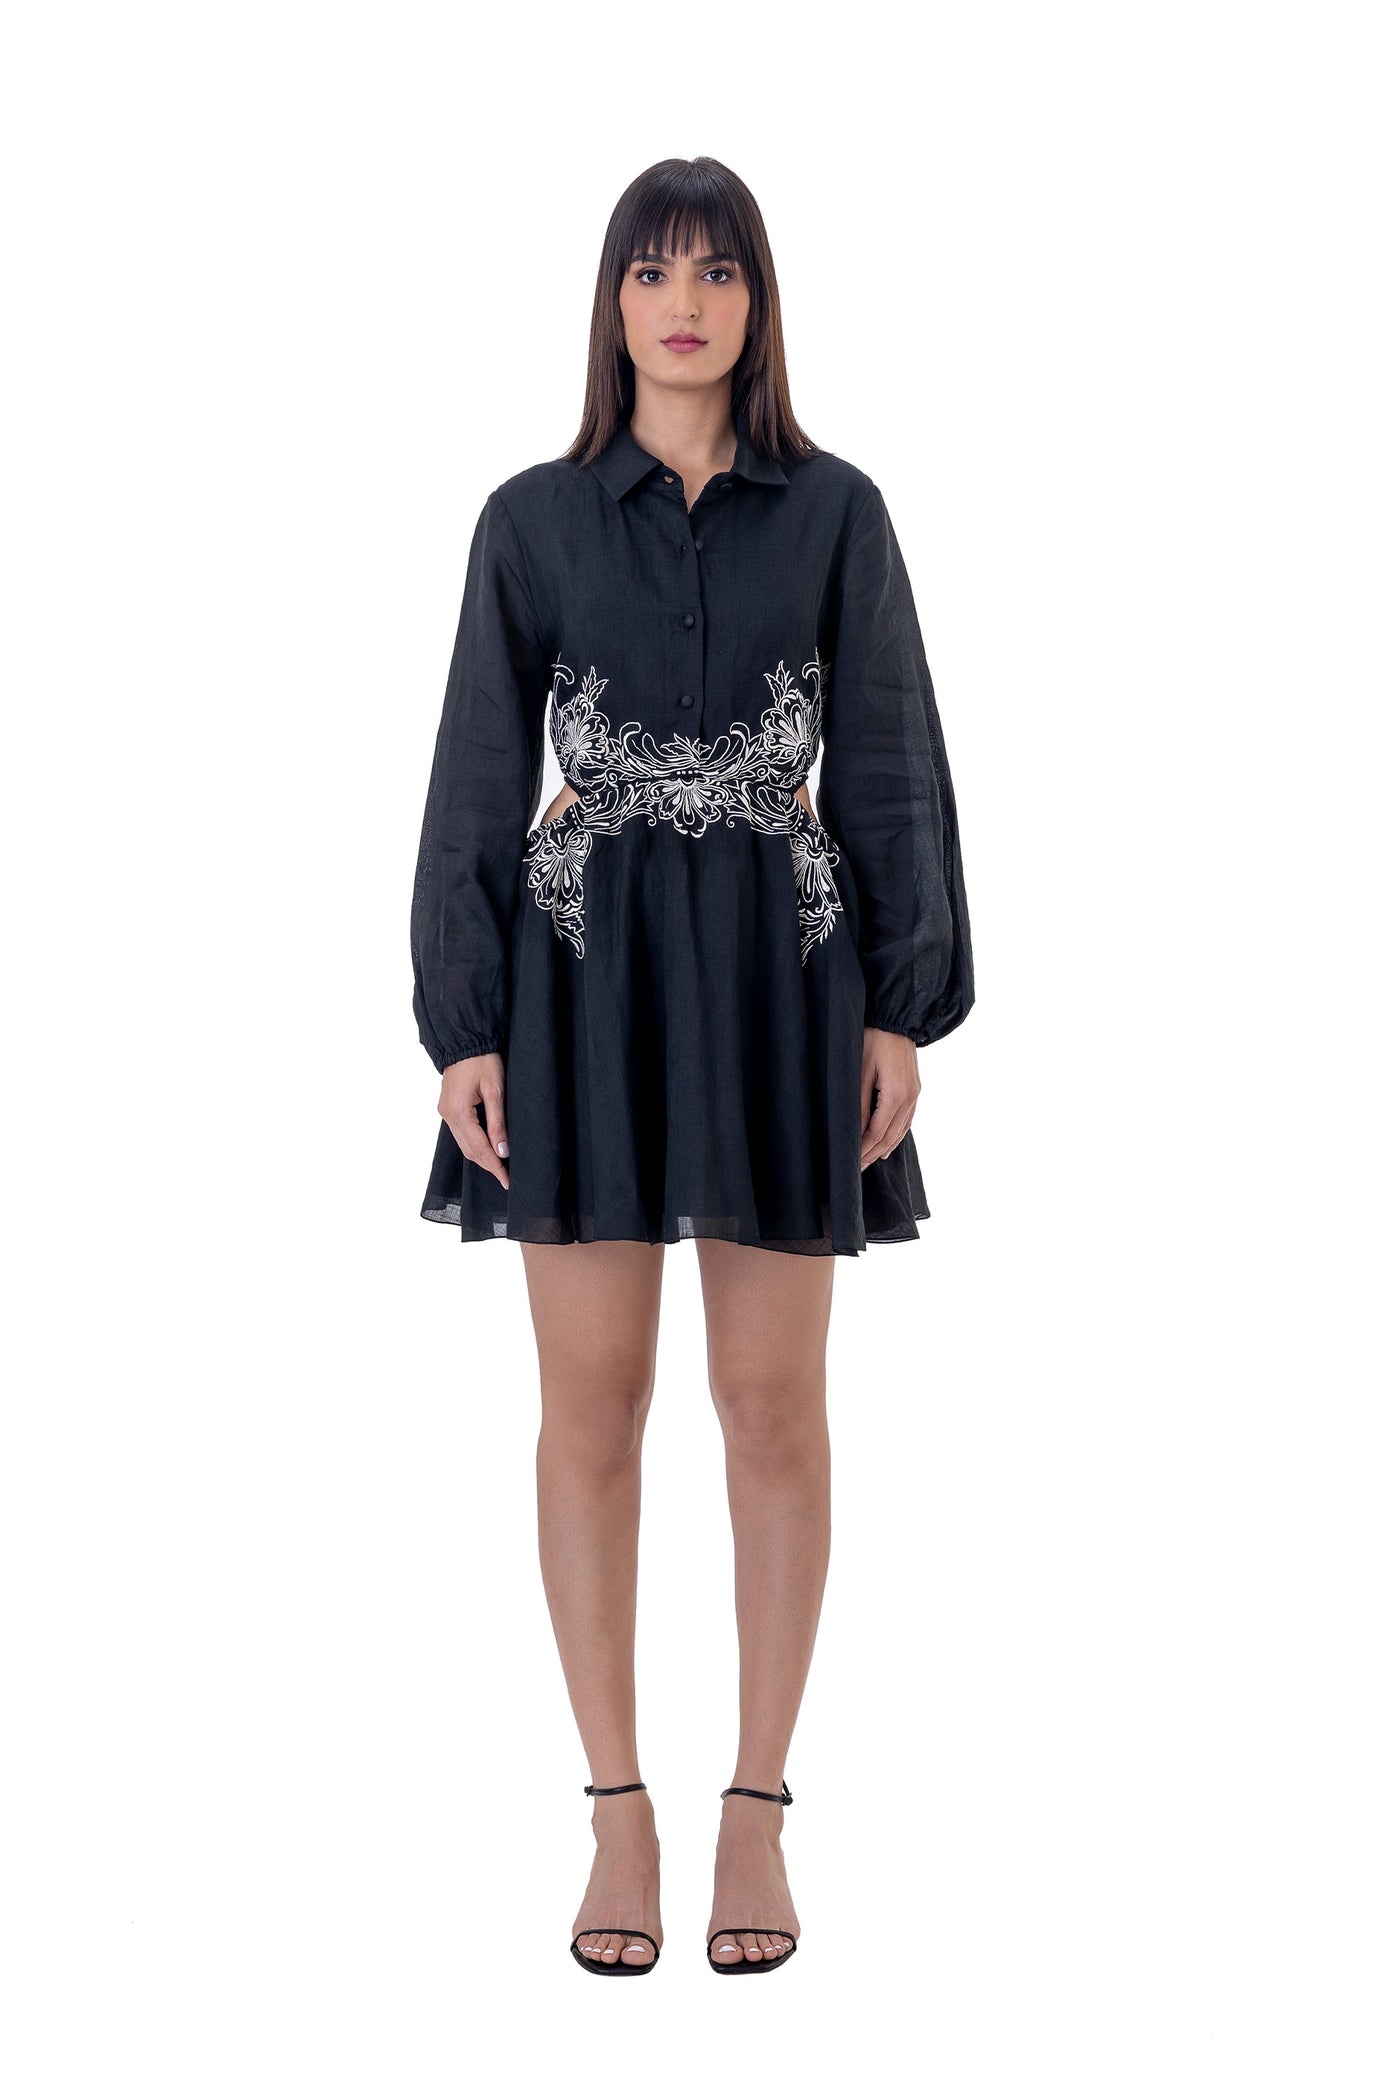 gaya Agnese Dress black online shopping melange singapore indian designer wear